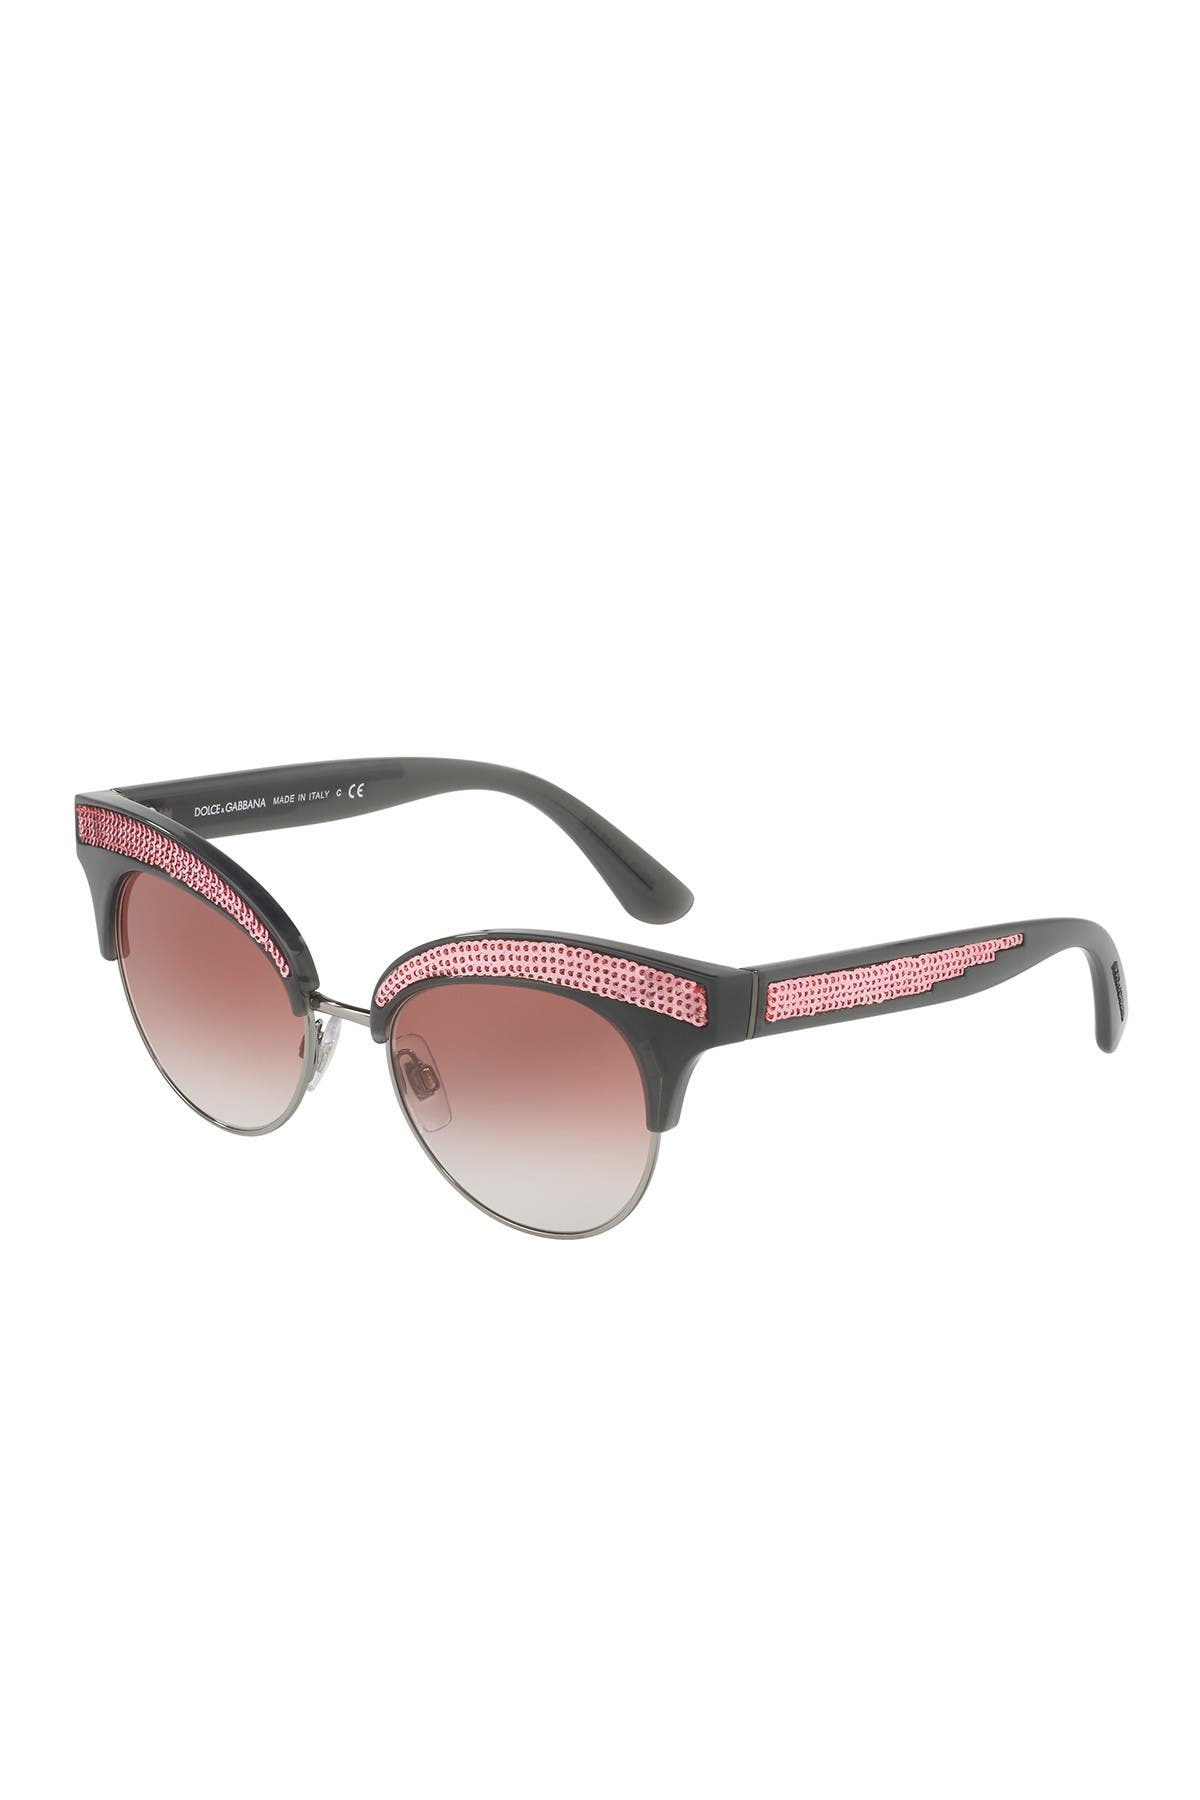 dolce & gabbana 50mm embellished cat eye sunglasses